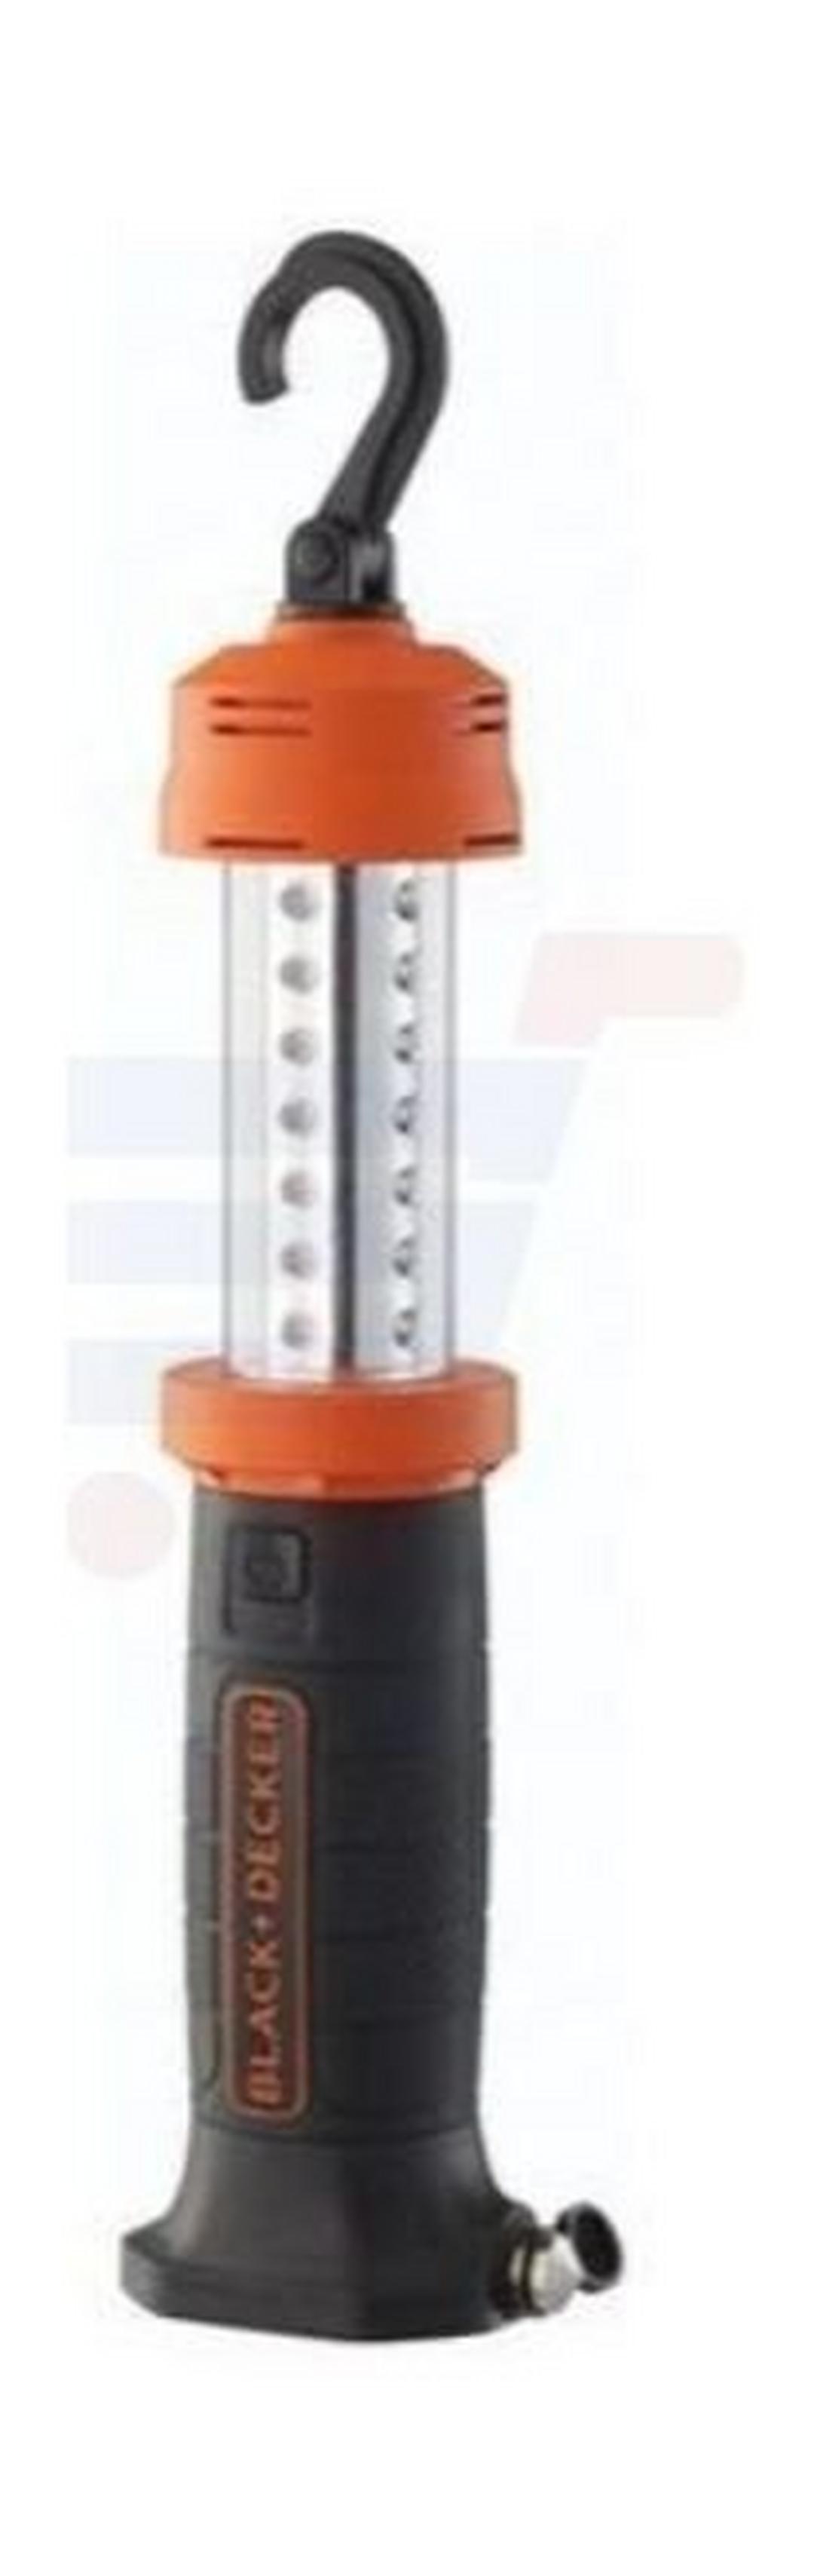 Black+Decker LED Crack Hammer Lantern - BDLCL28-B5